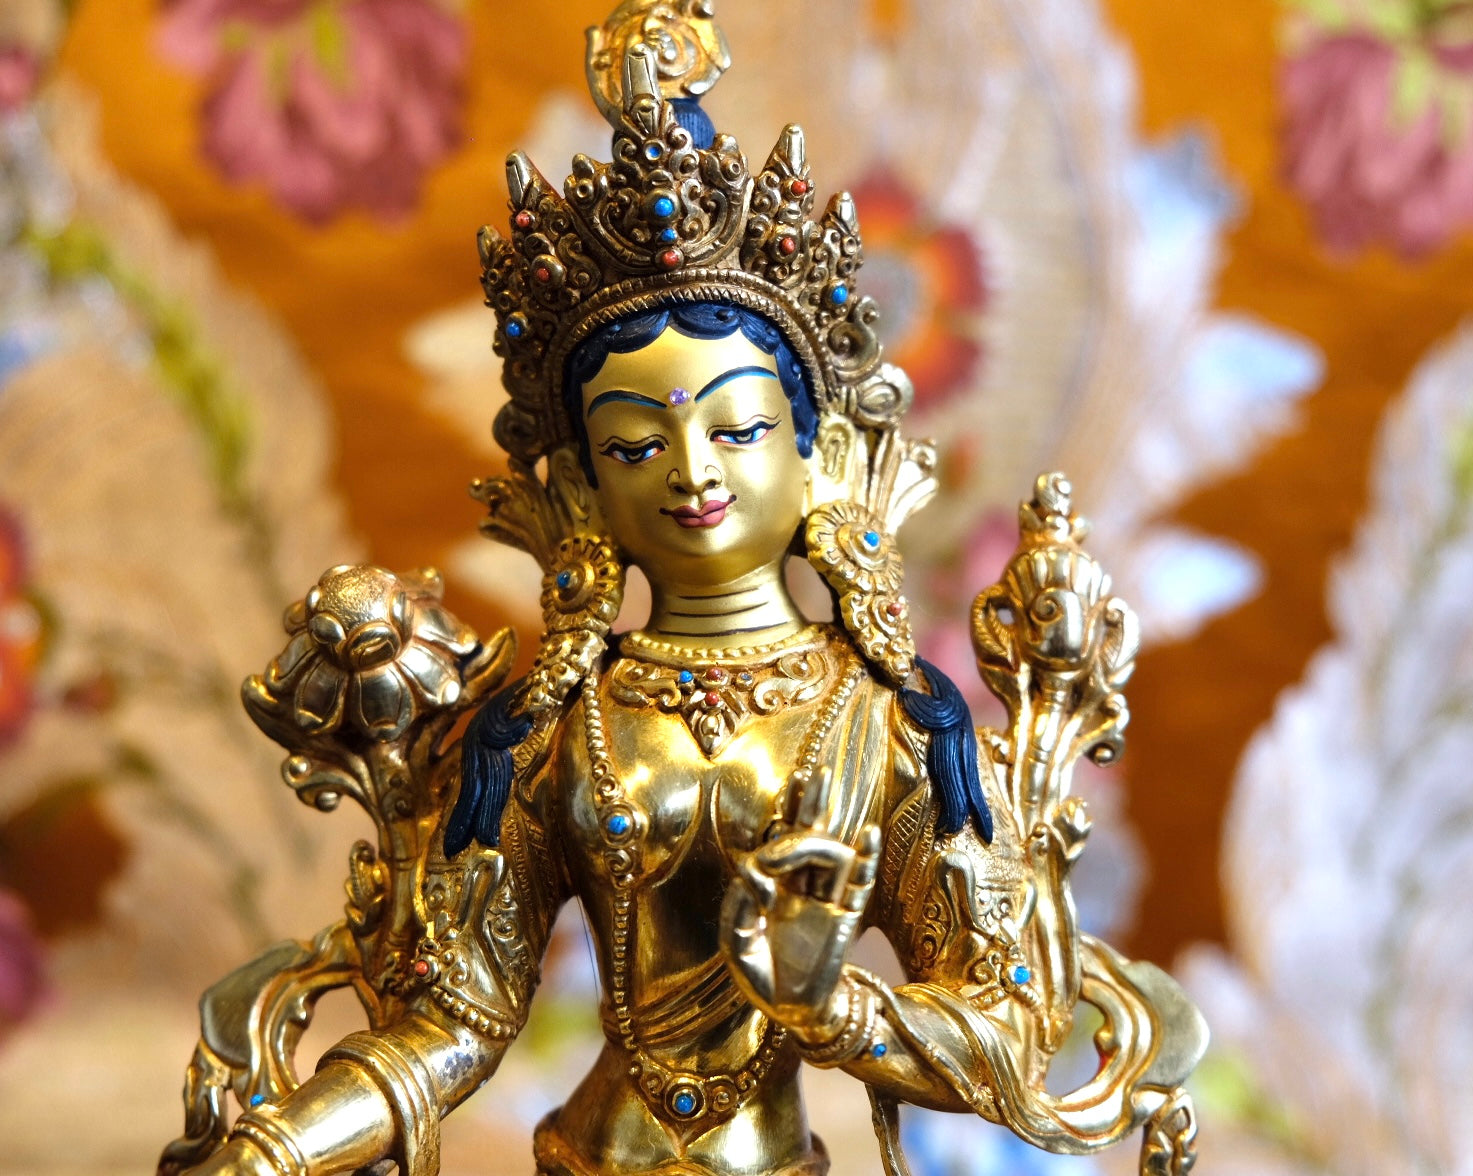 Close up of face of Tara statue